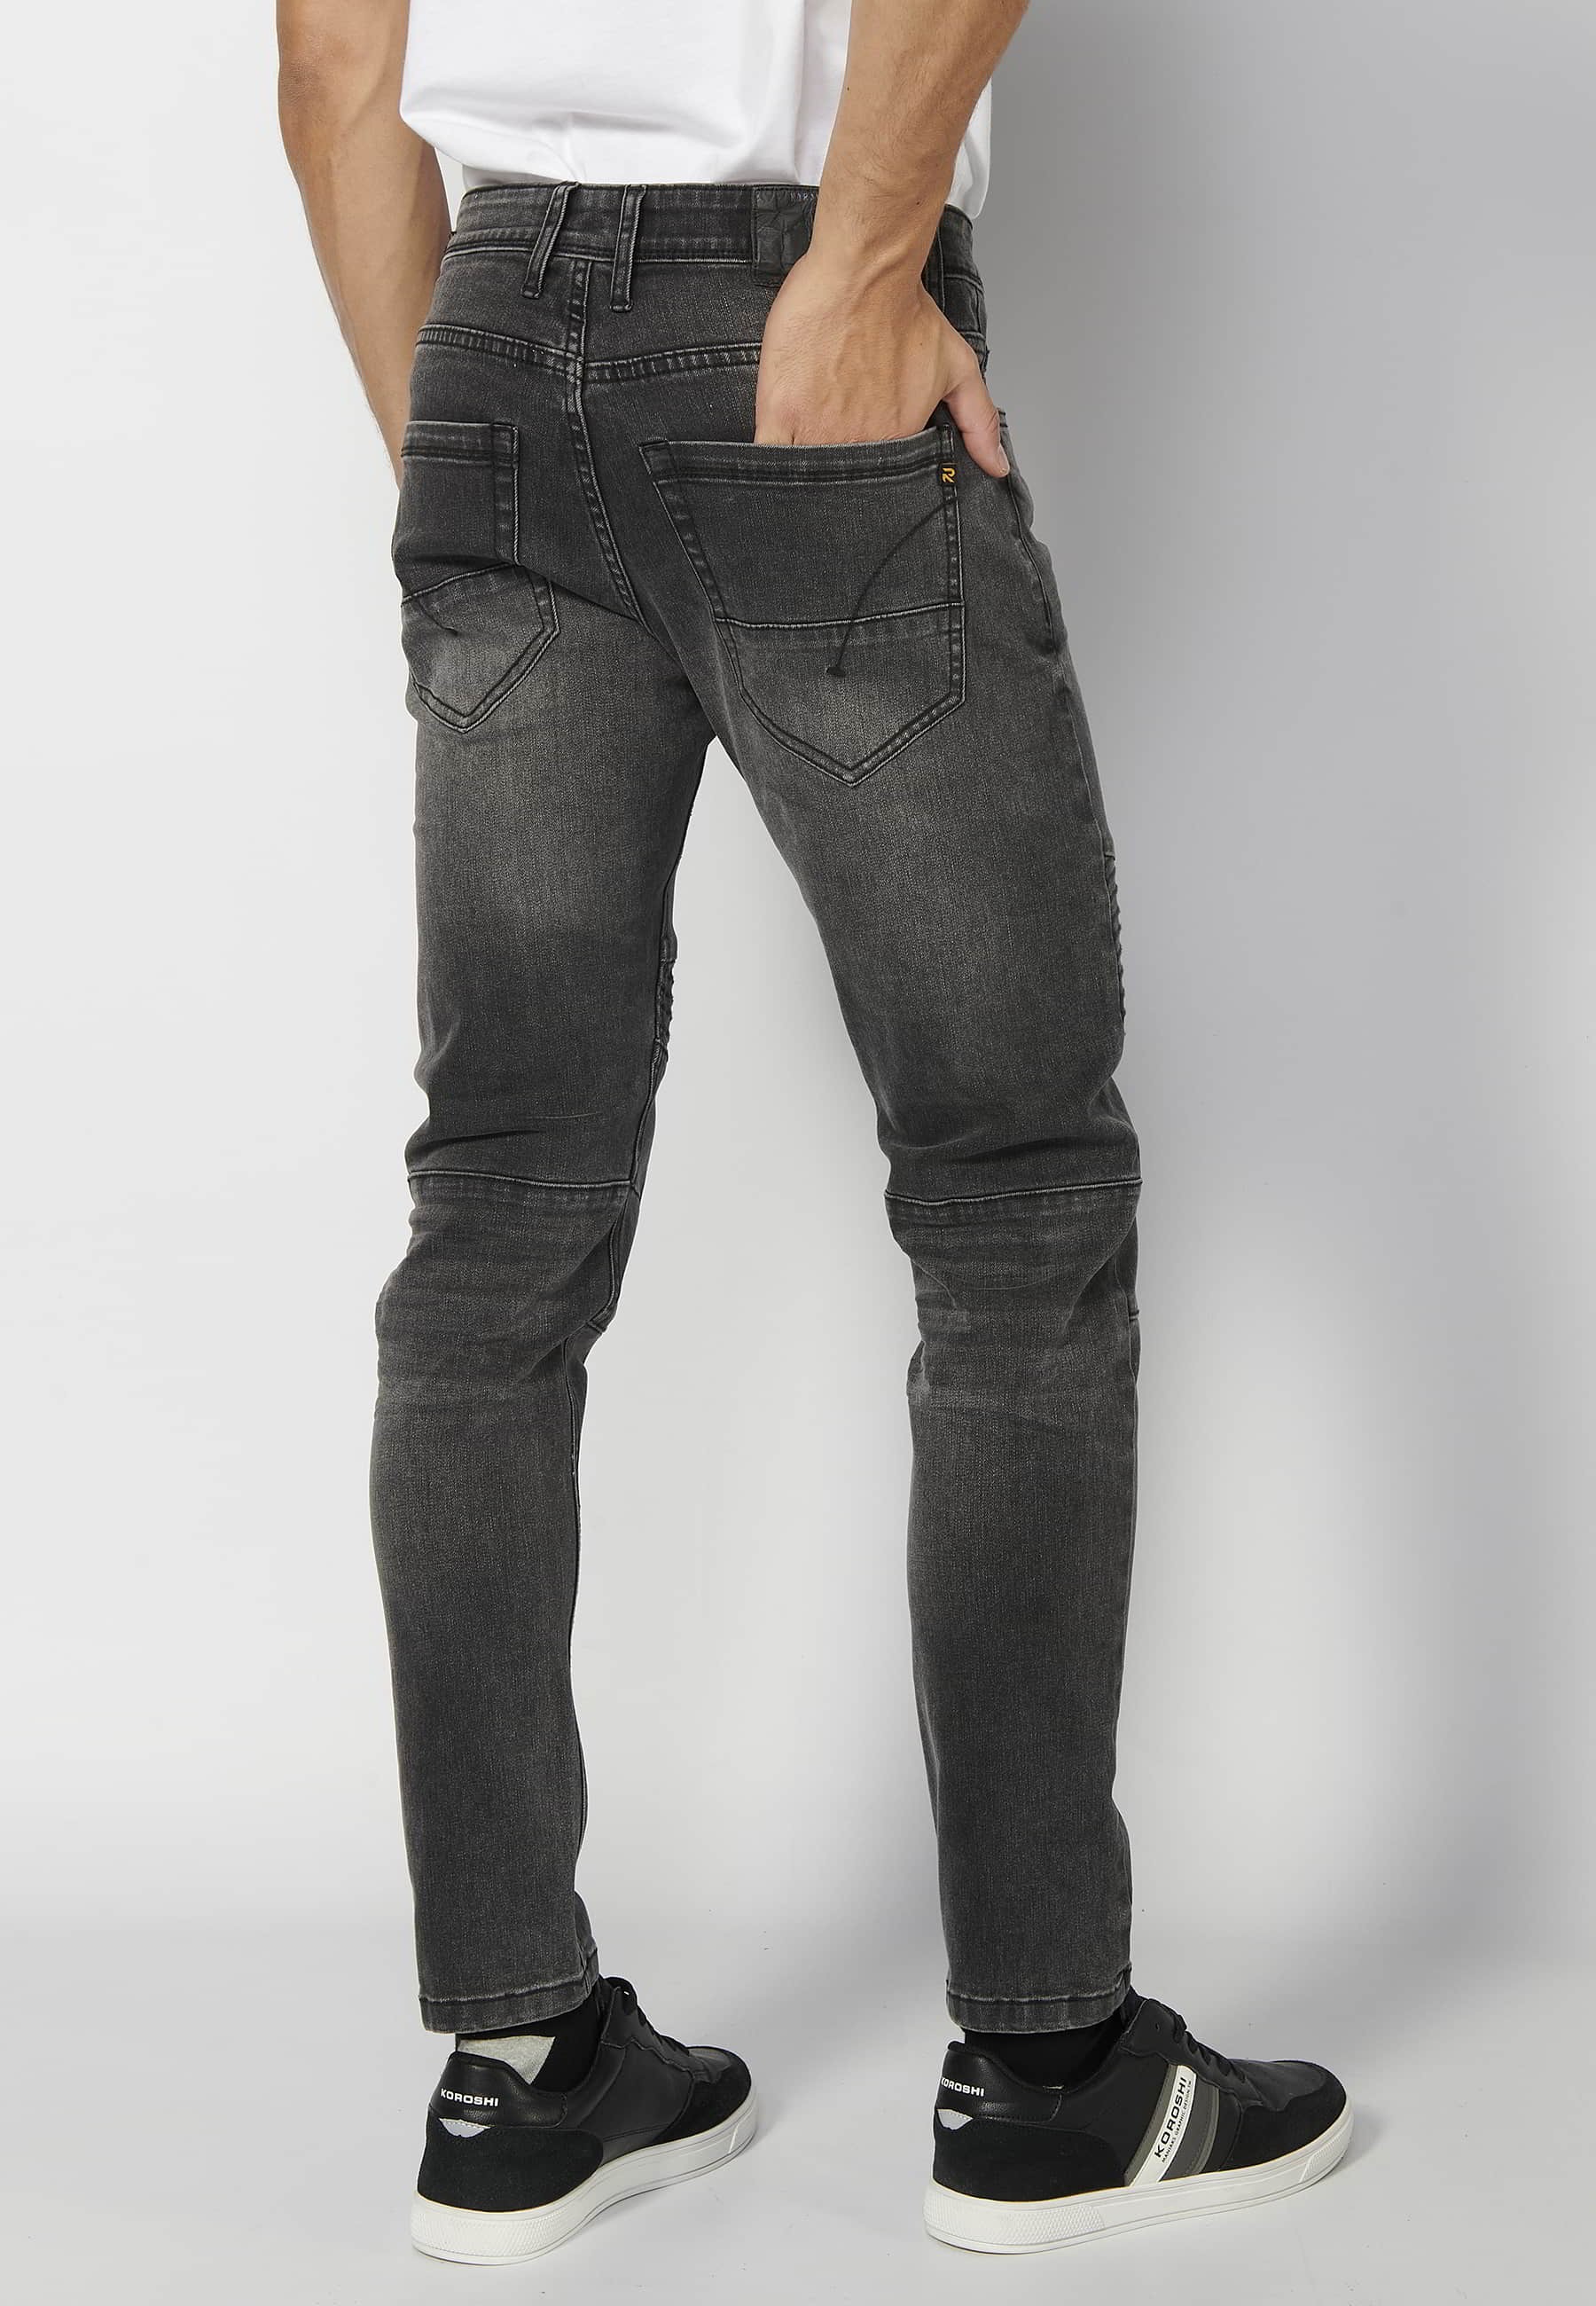 Long skinny fit pants, with five pockets, worn black color for Men 2